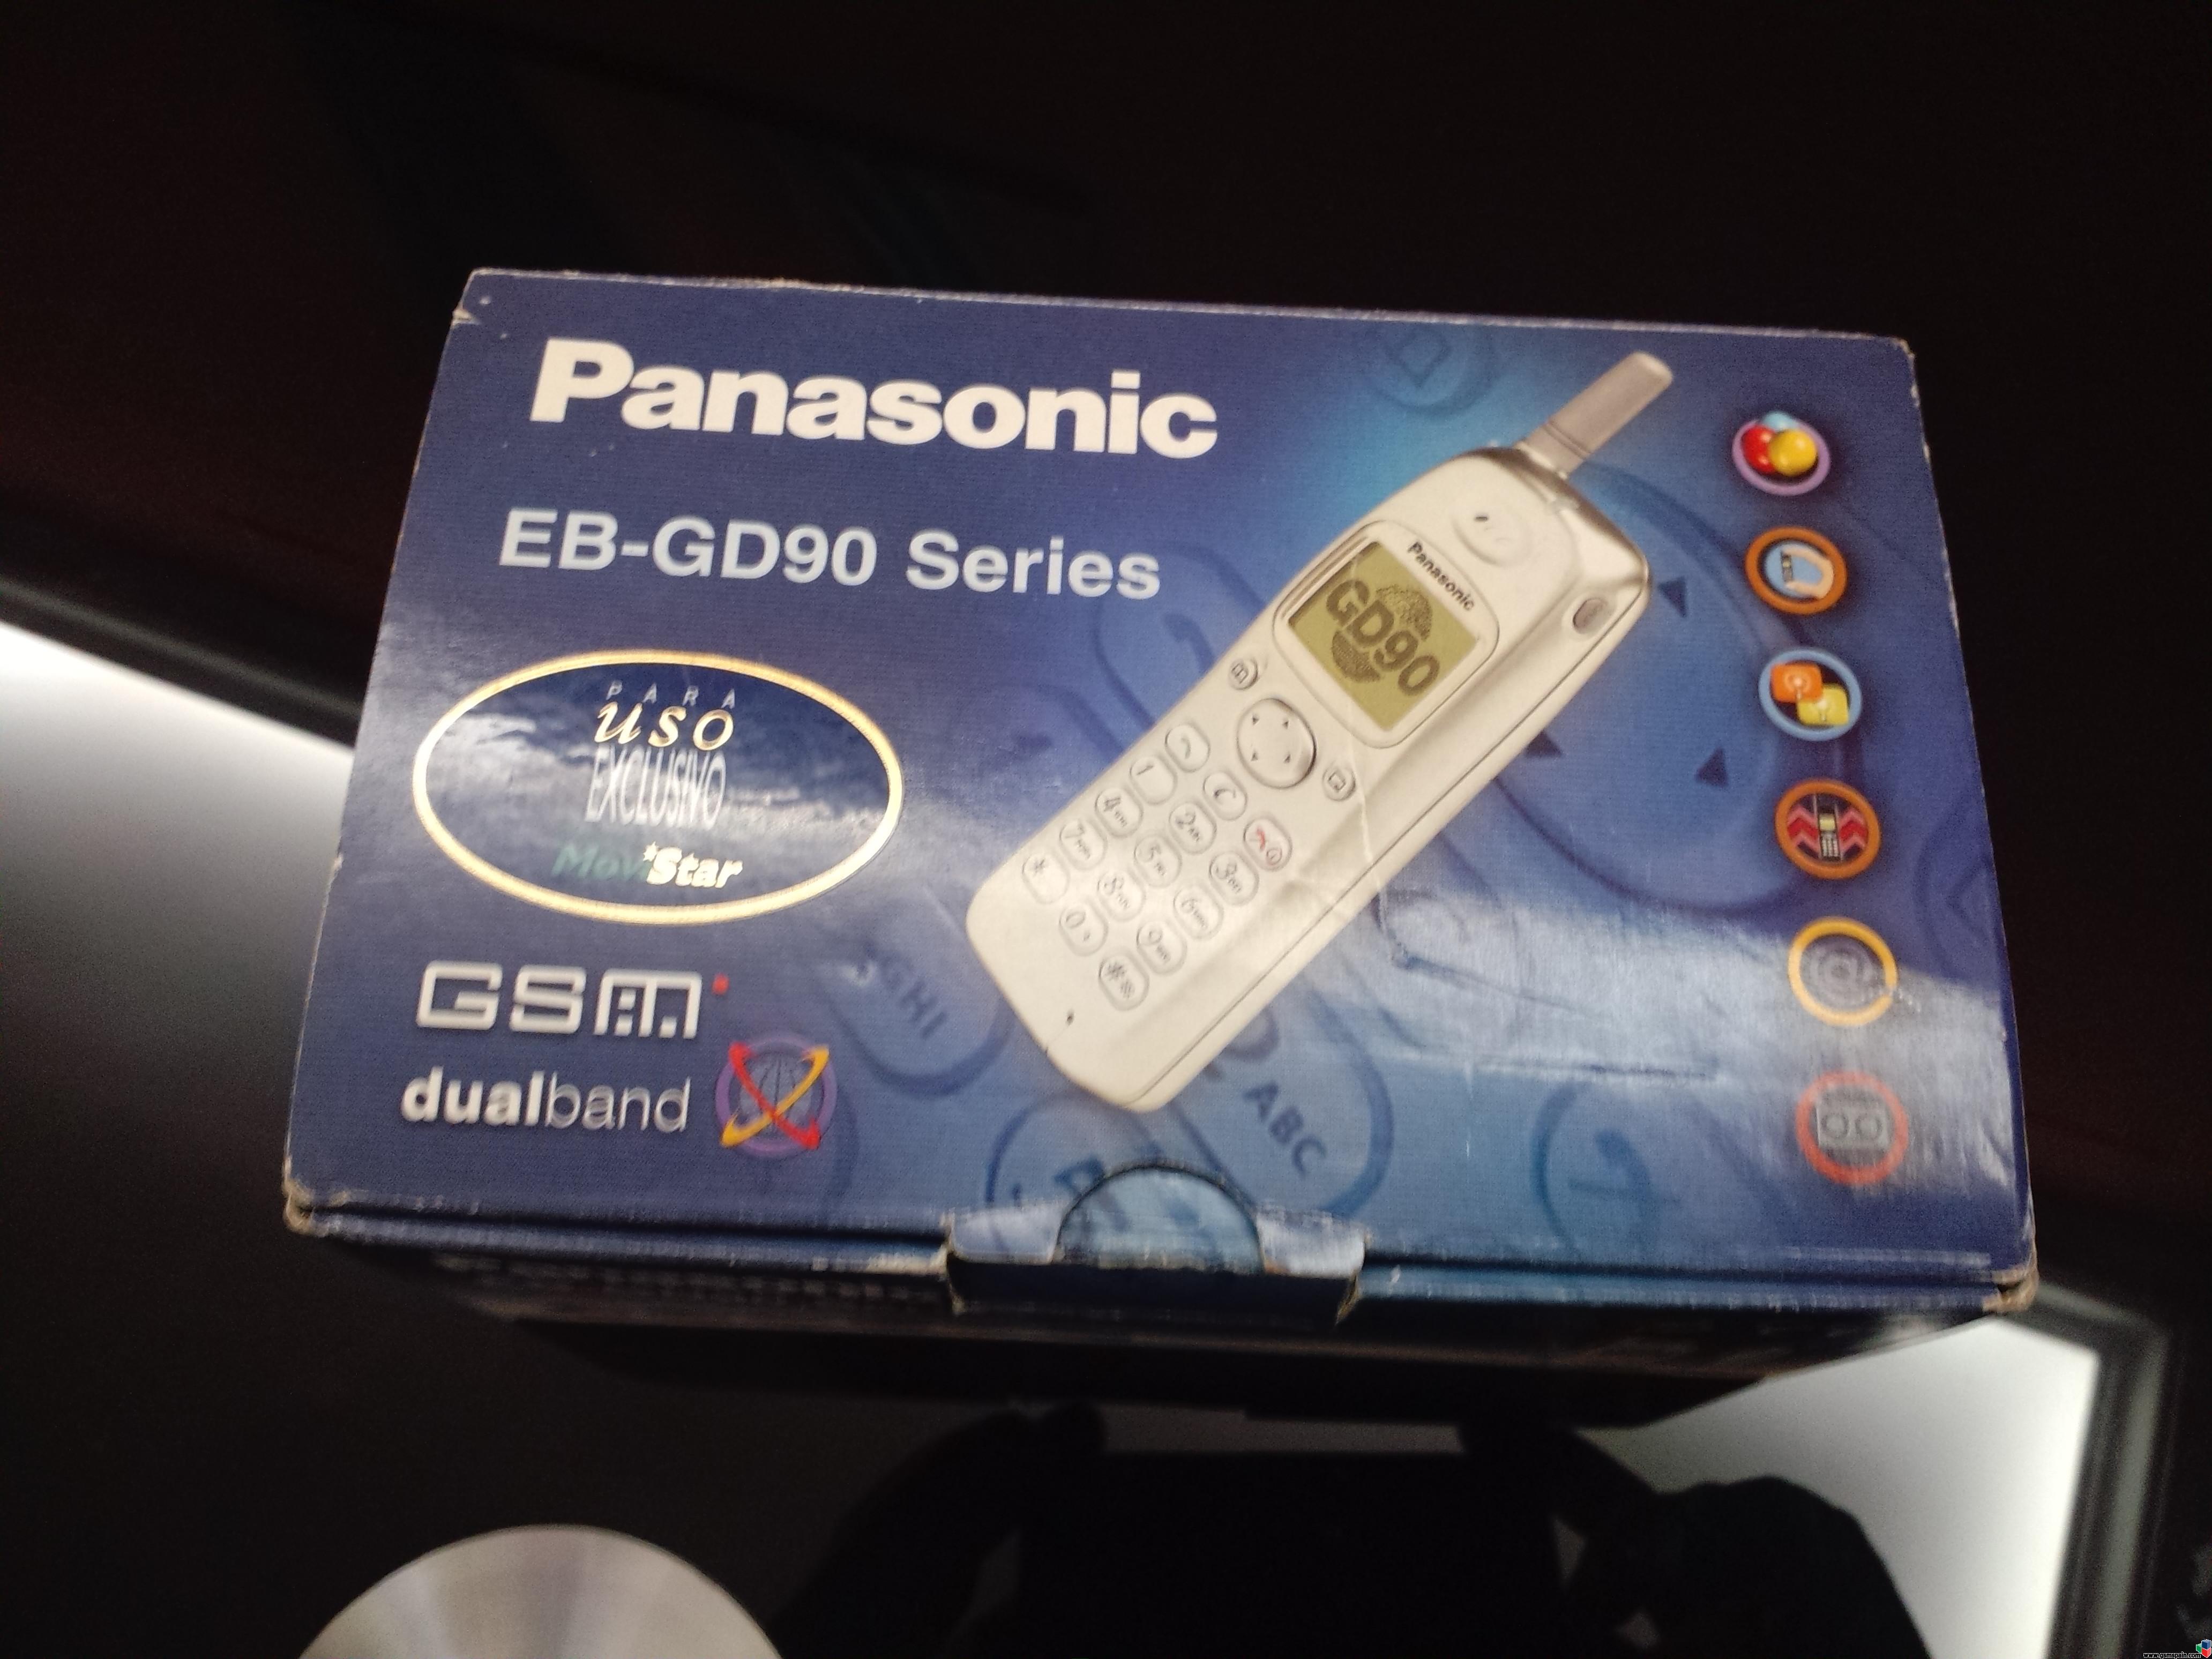 Tendria salida vender un Panasonic RB-GD90 Series?